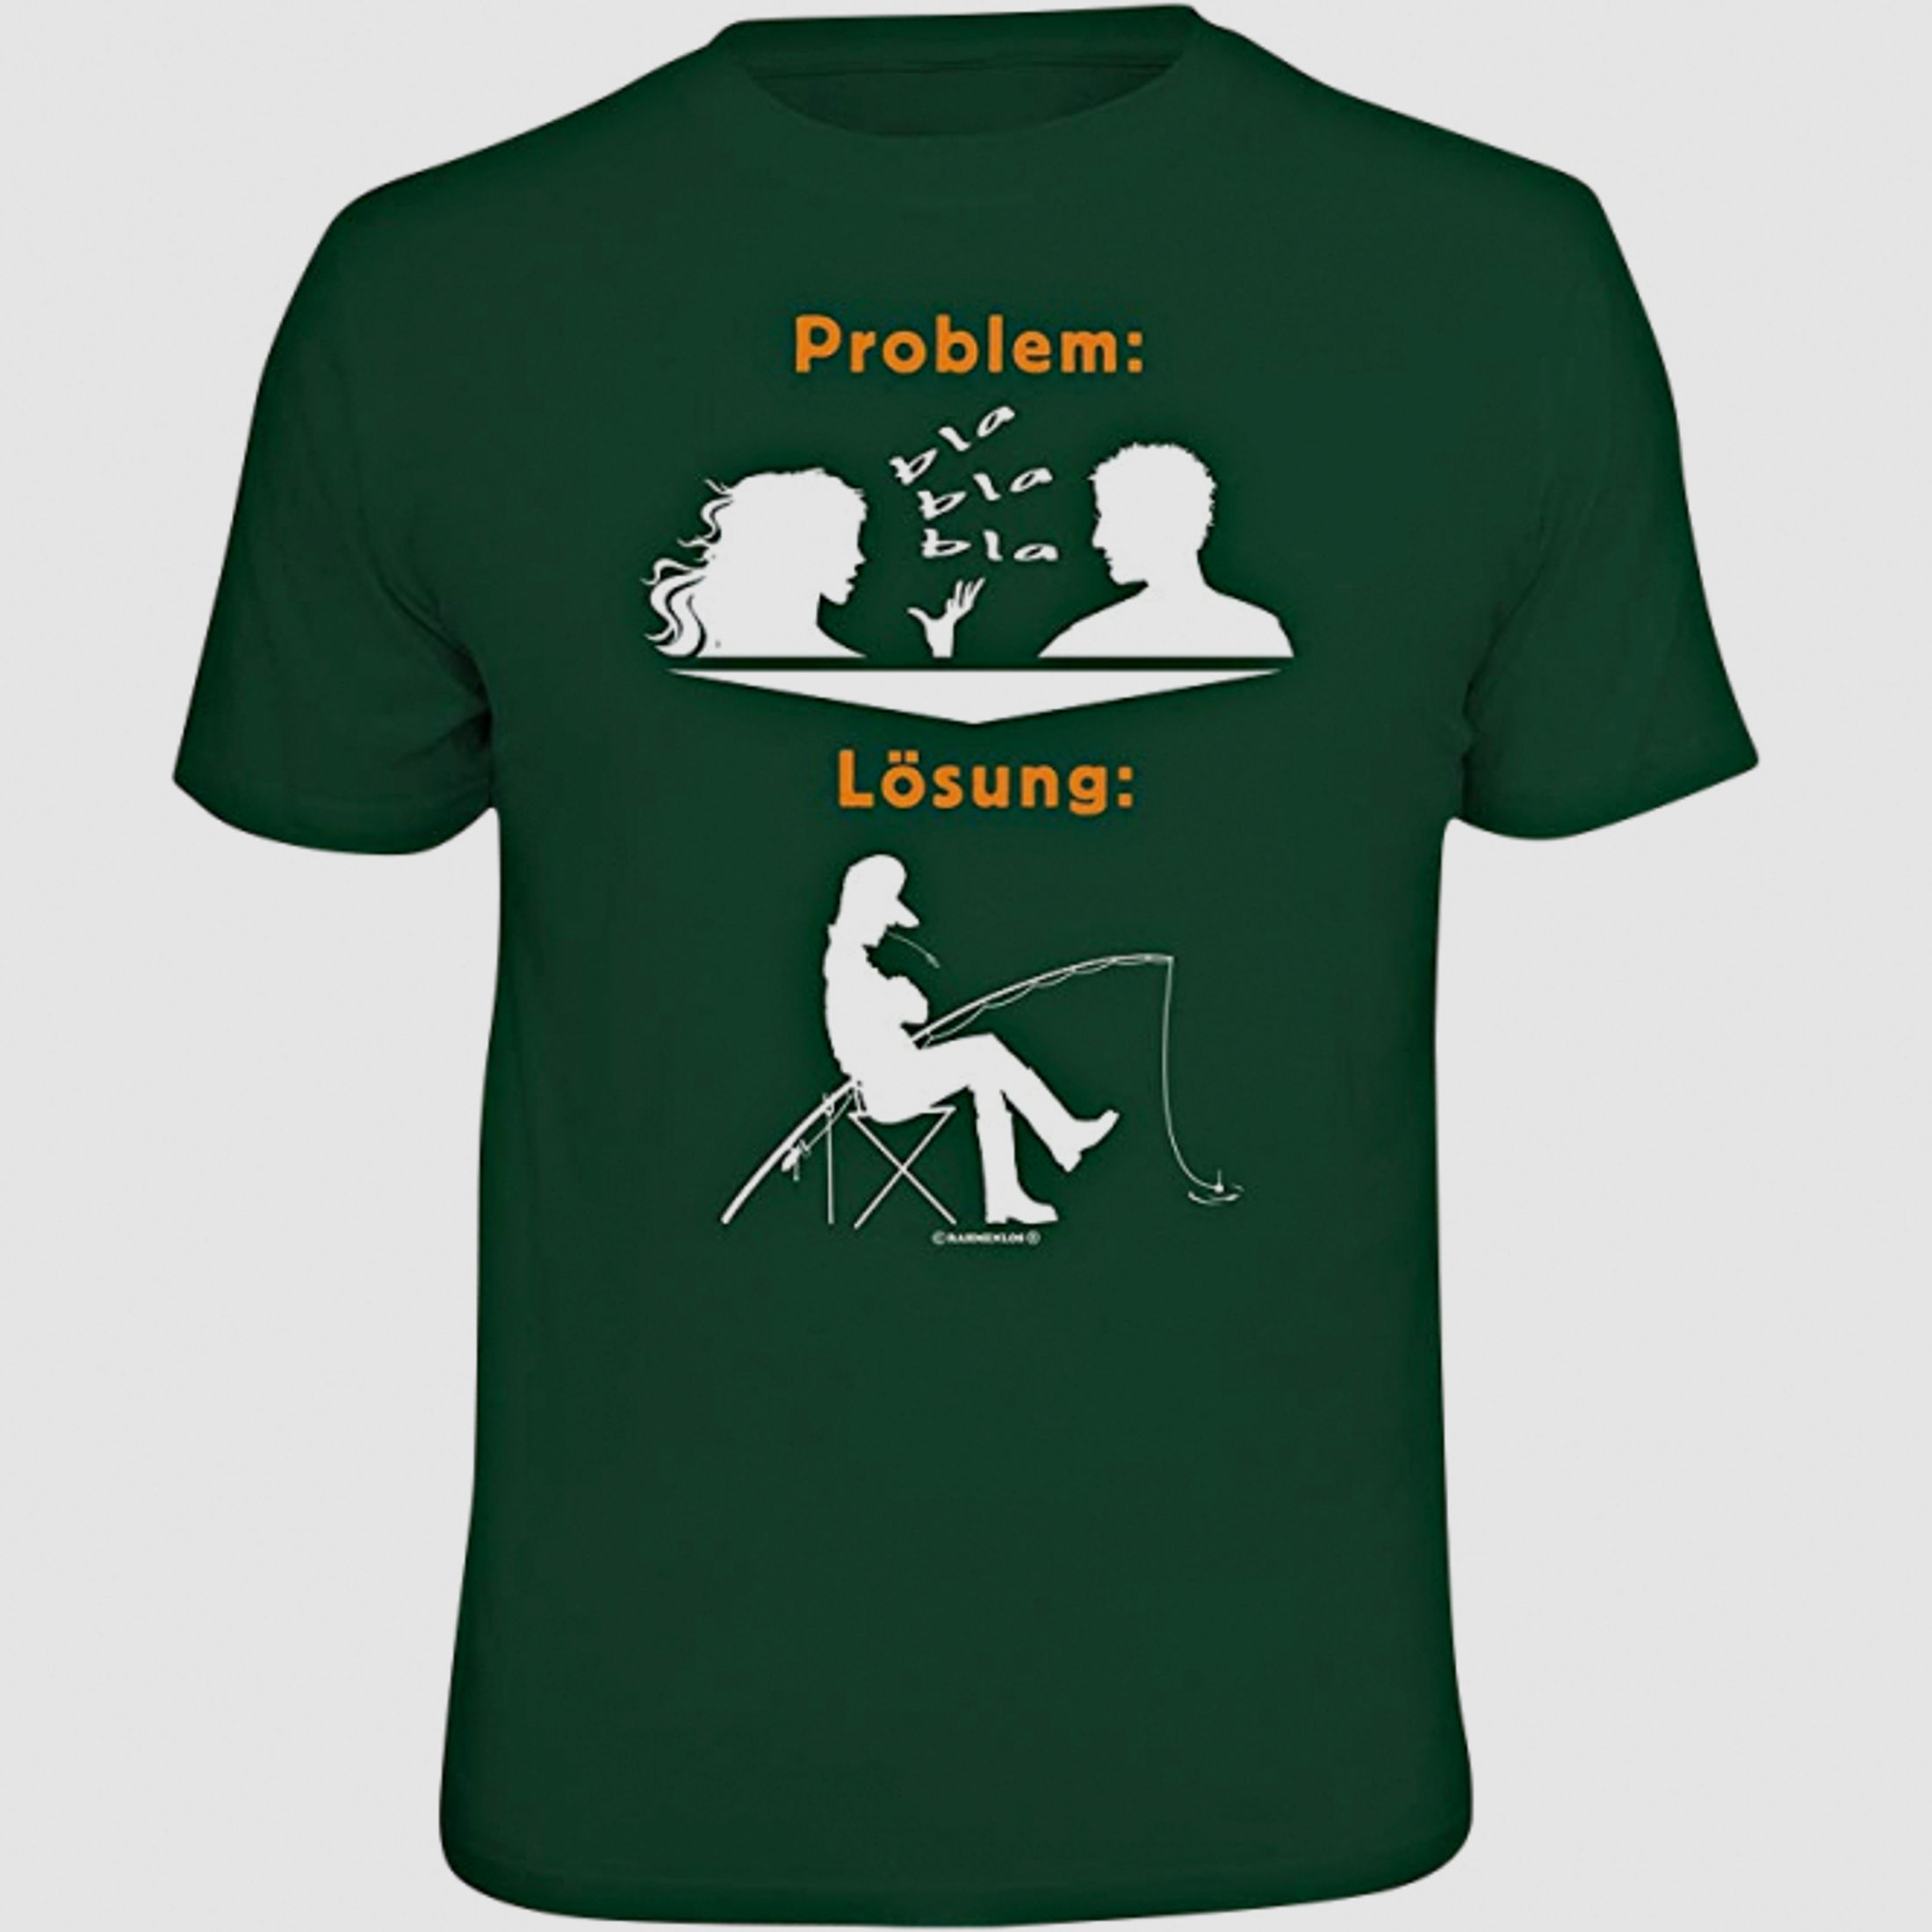 Rahmenlos       Rahmenlos   Herren T-Shirt "Problem: Bla Bla Bla - Lösung"